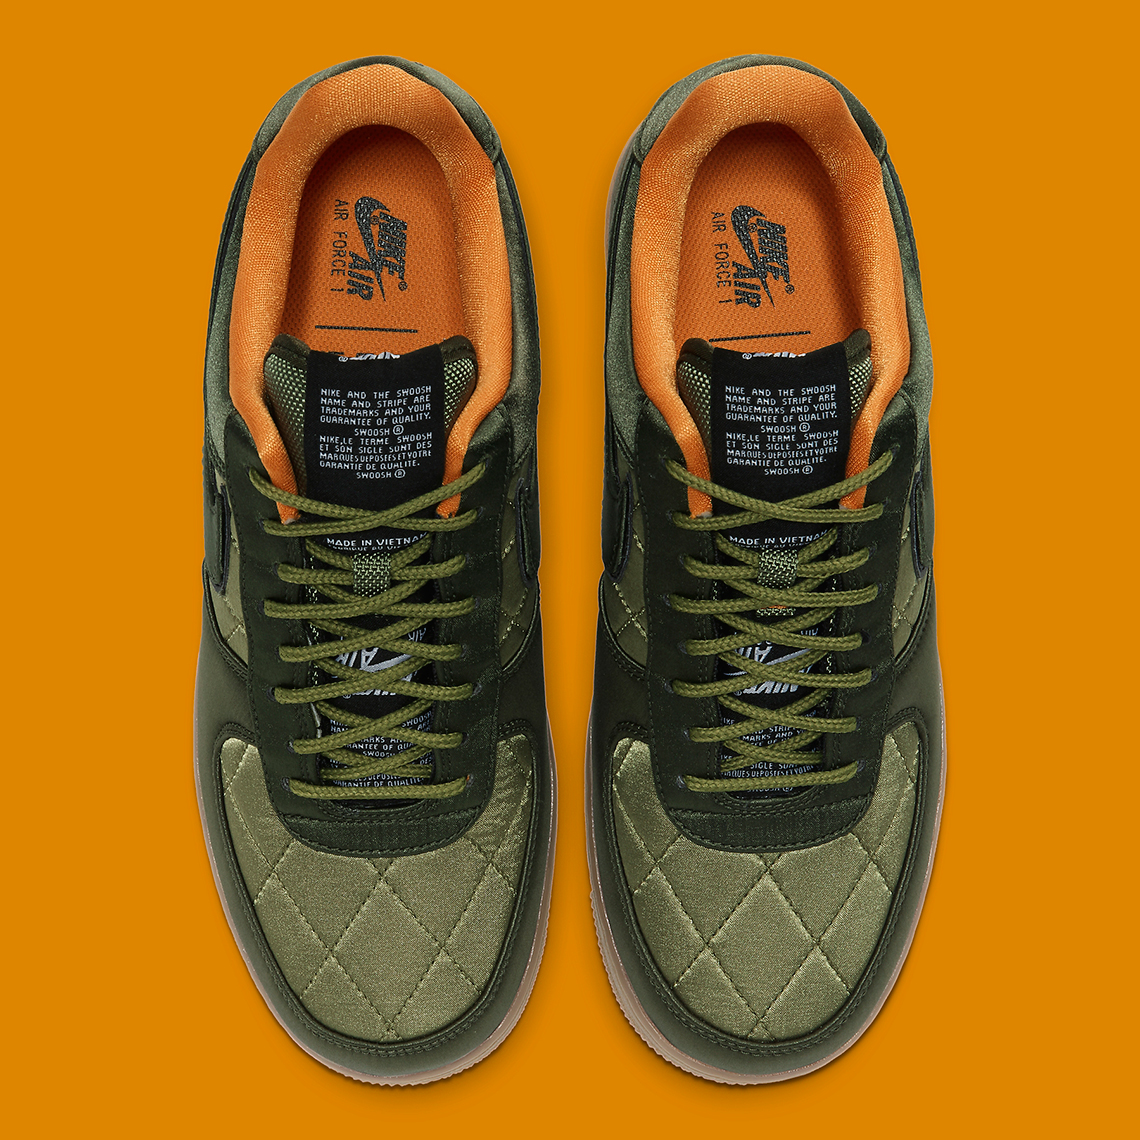 Nike nike air trim ax 94 lime green shoes heels Cu6724 333 1